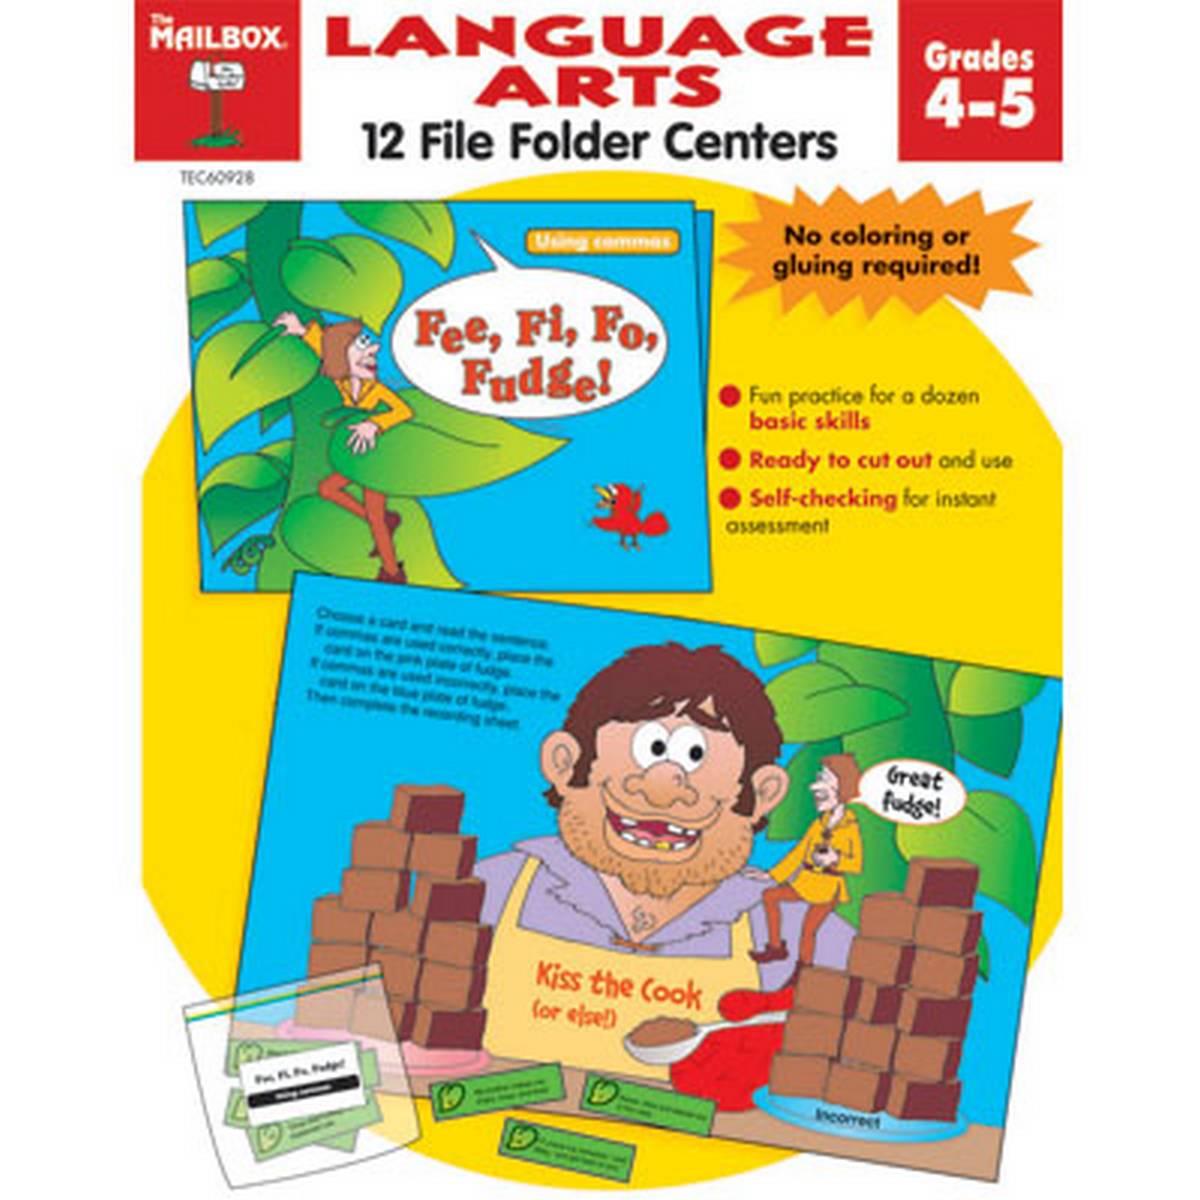 Language Arts: 12 File Folder Centre - 3rd/4th Class